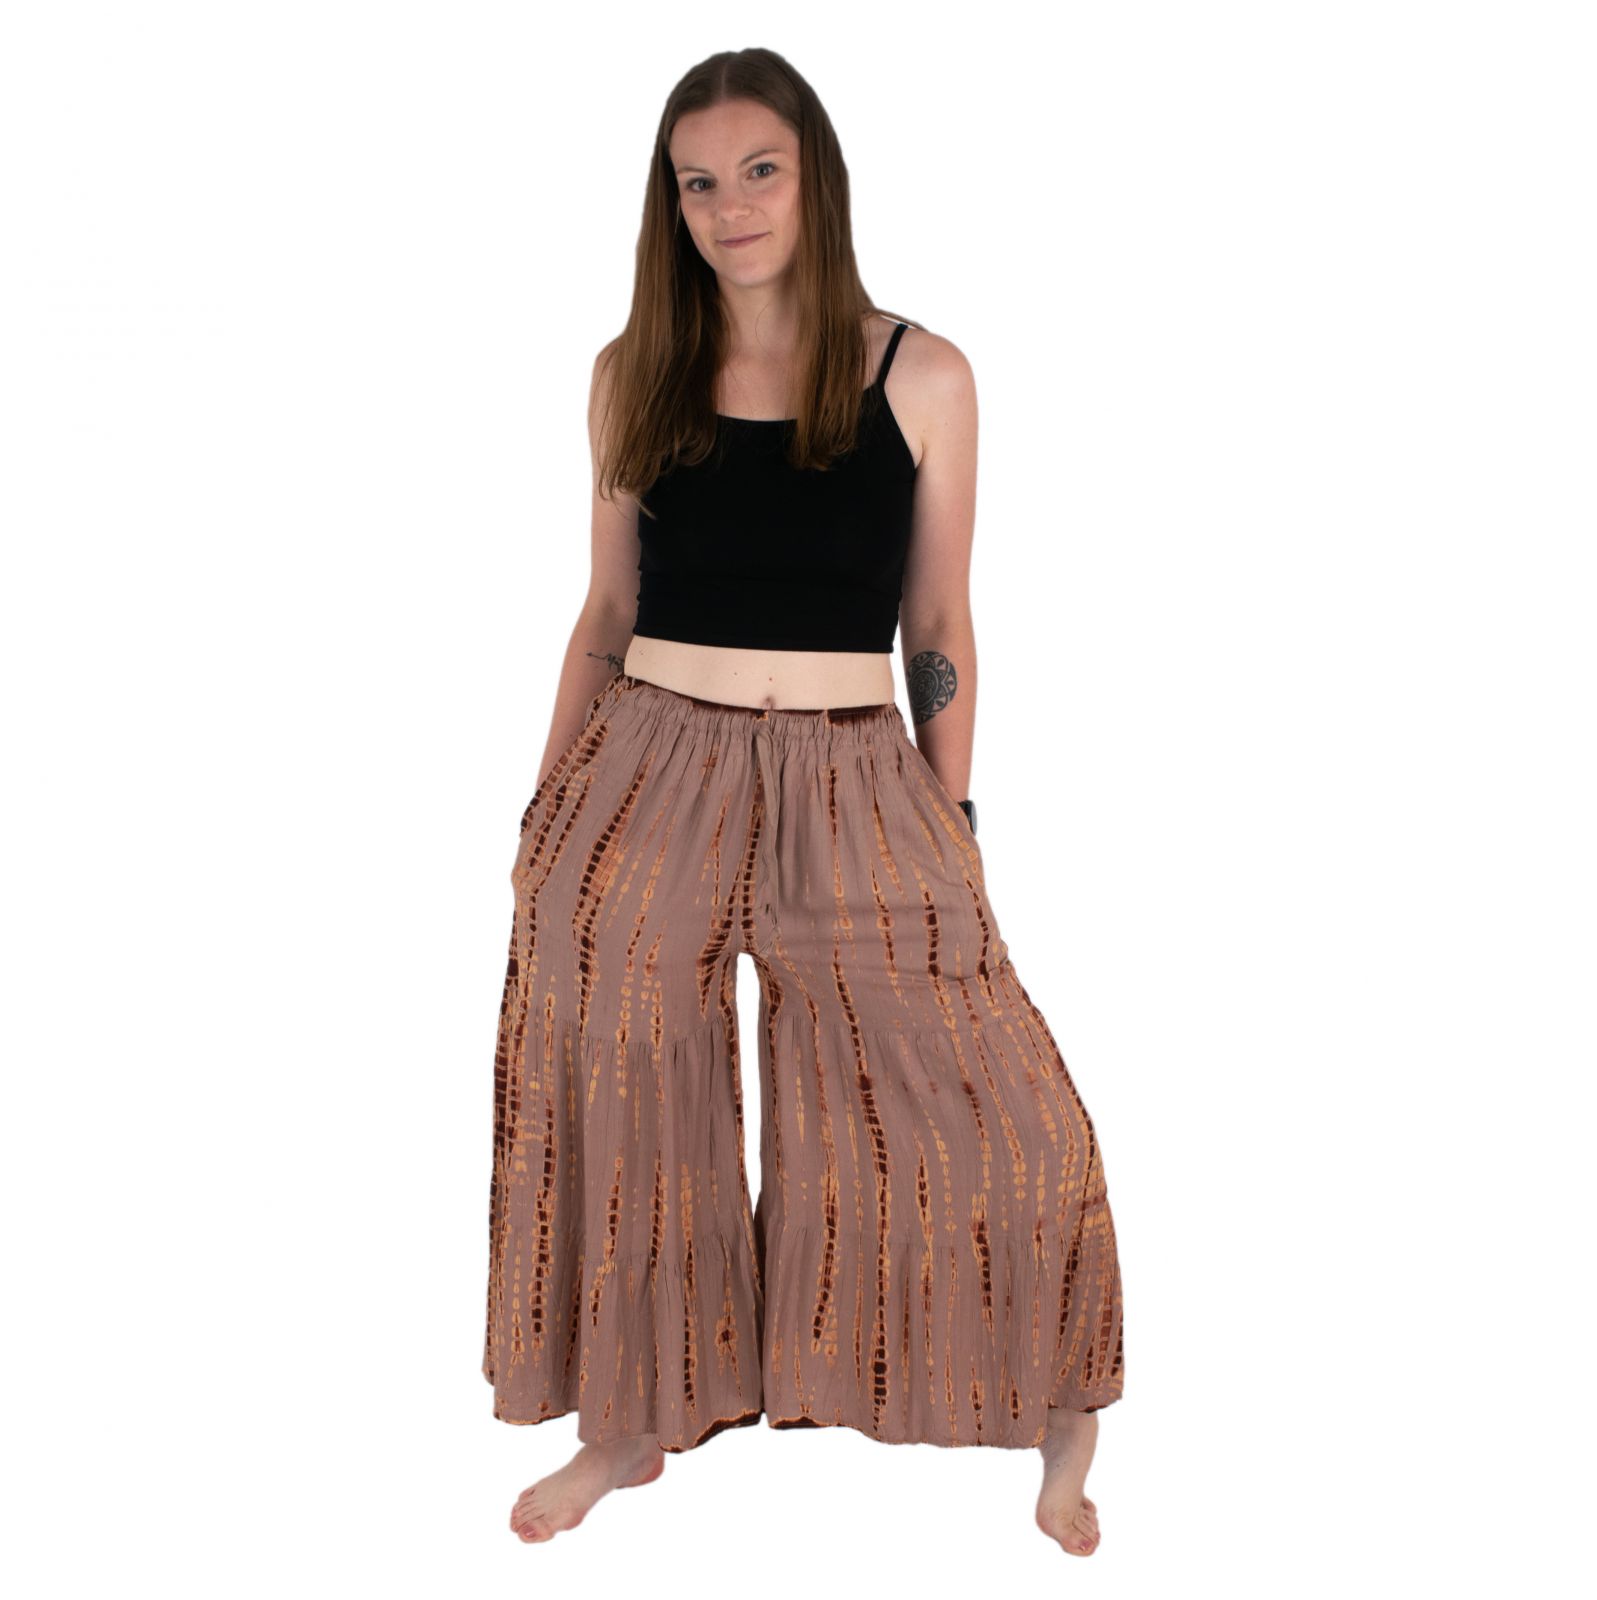 Tie-dye trouser skirt Yana Greyish-Brown Thailand